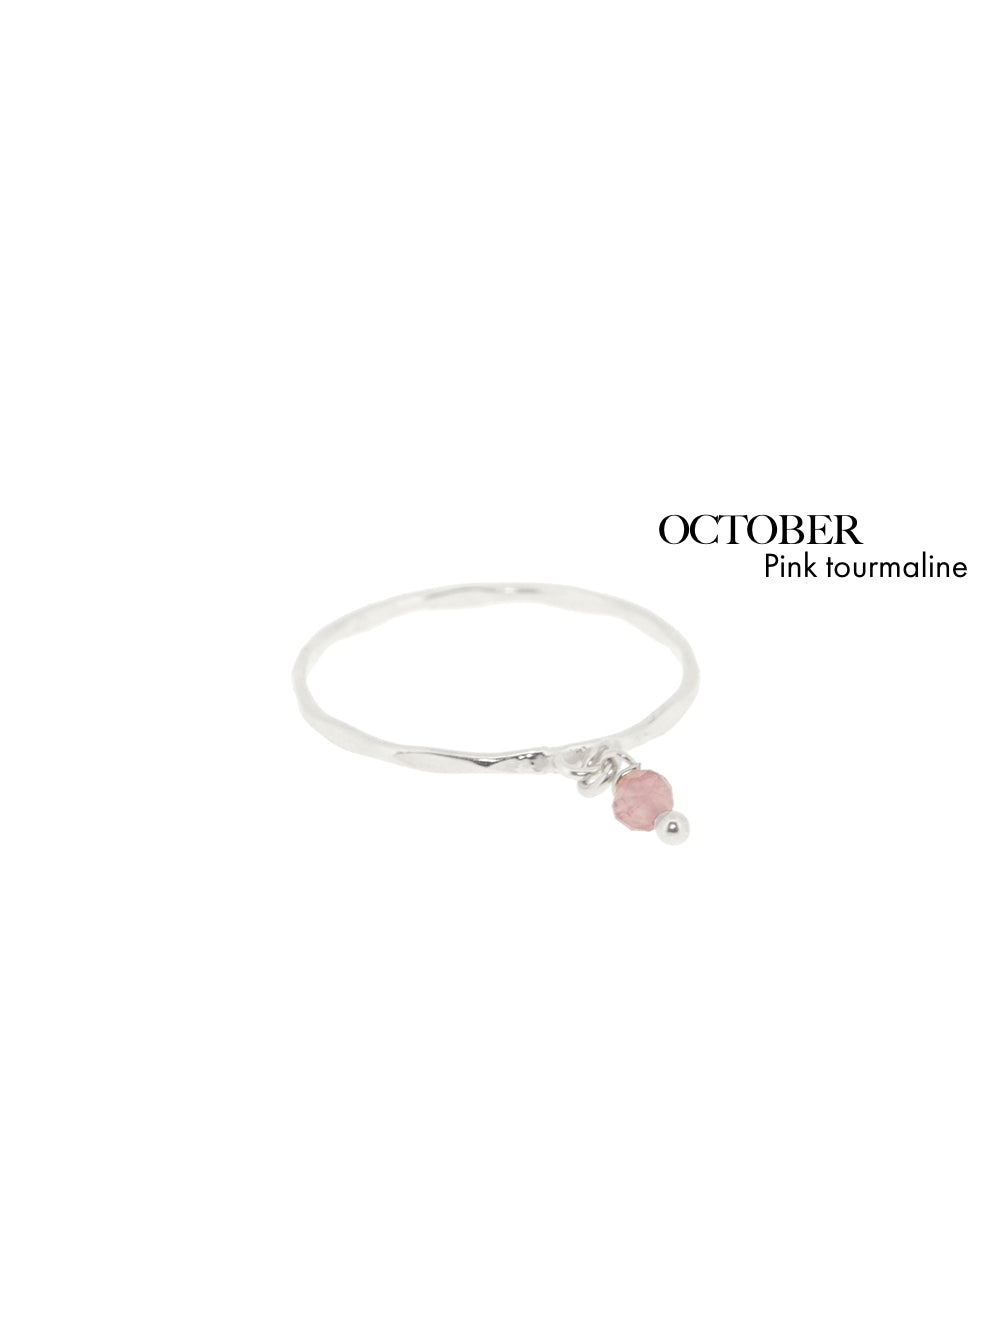 Birthstone ring October - Pink Tourmaline | 925 Sterling Silver